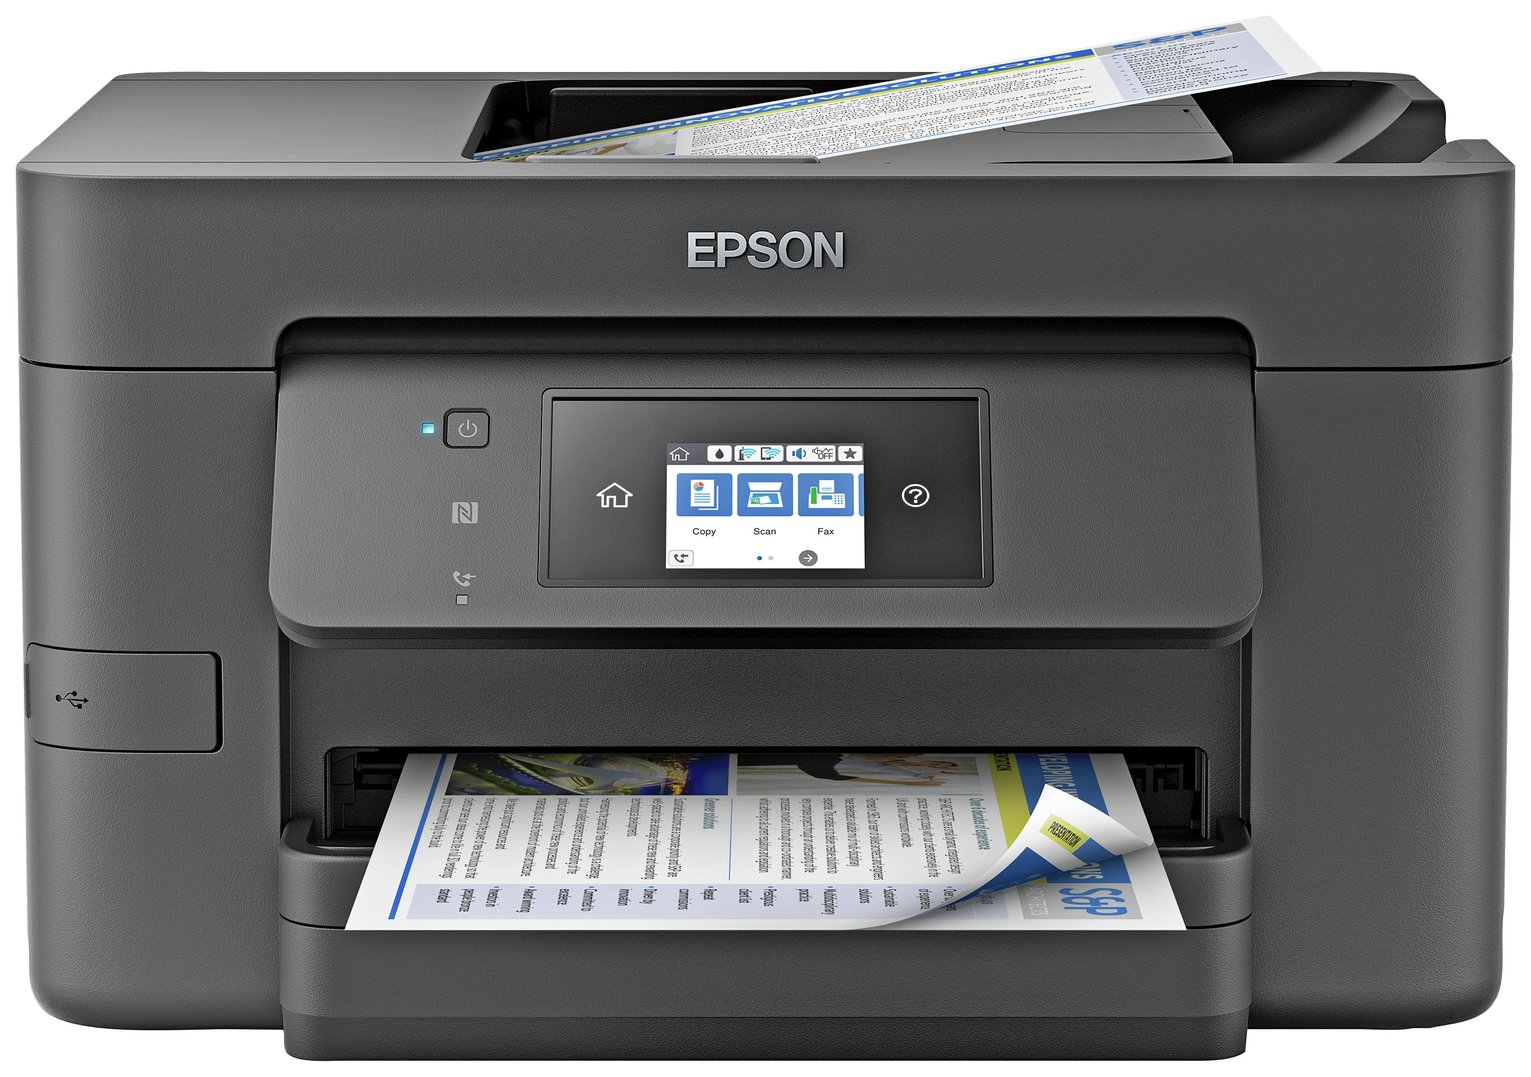 Epson Workforce Pro Wf 3720dwf Inkjet Printer Review 1154